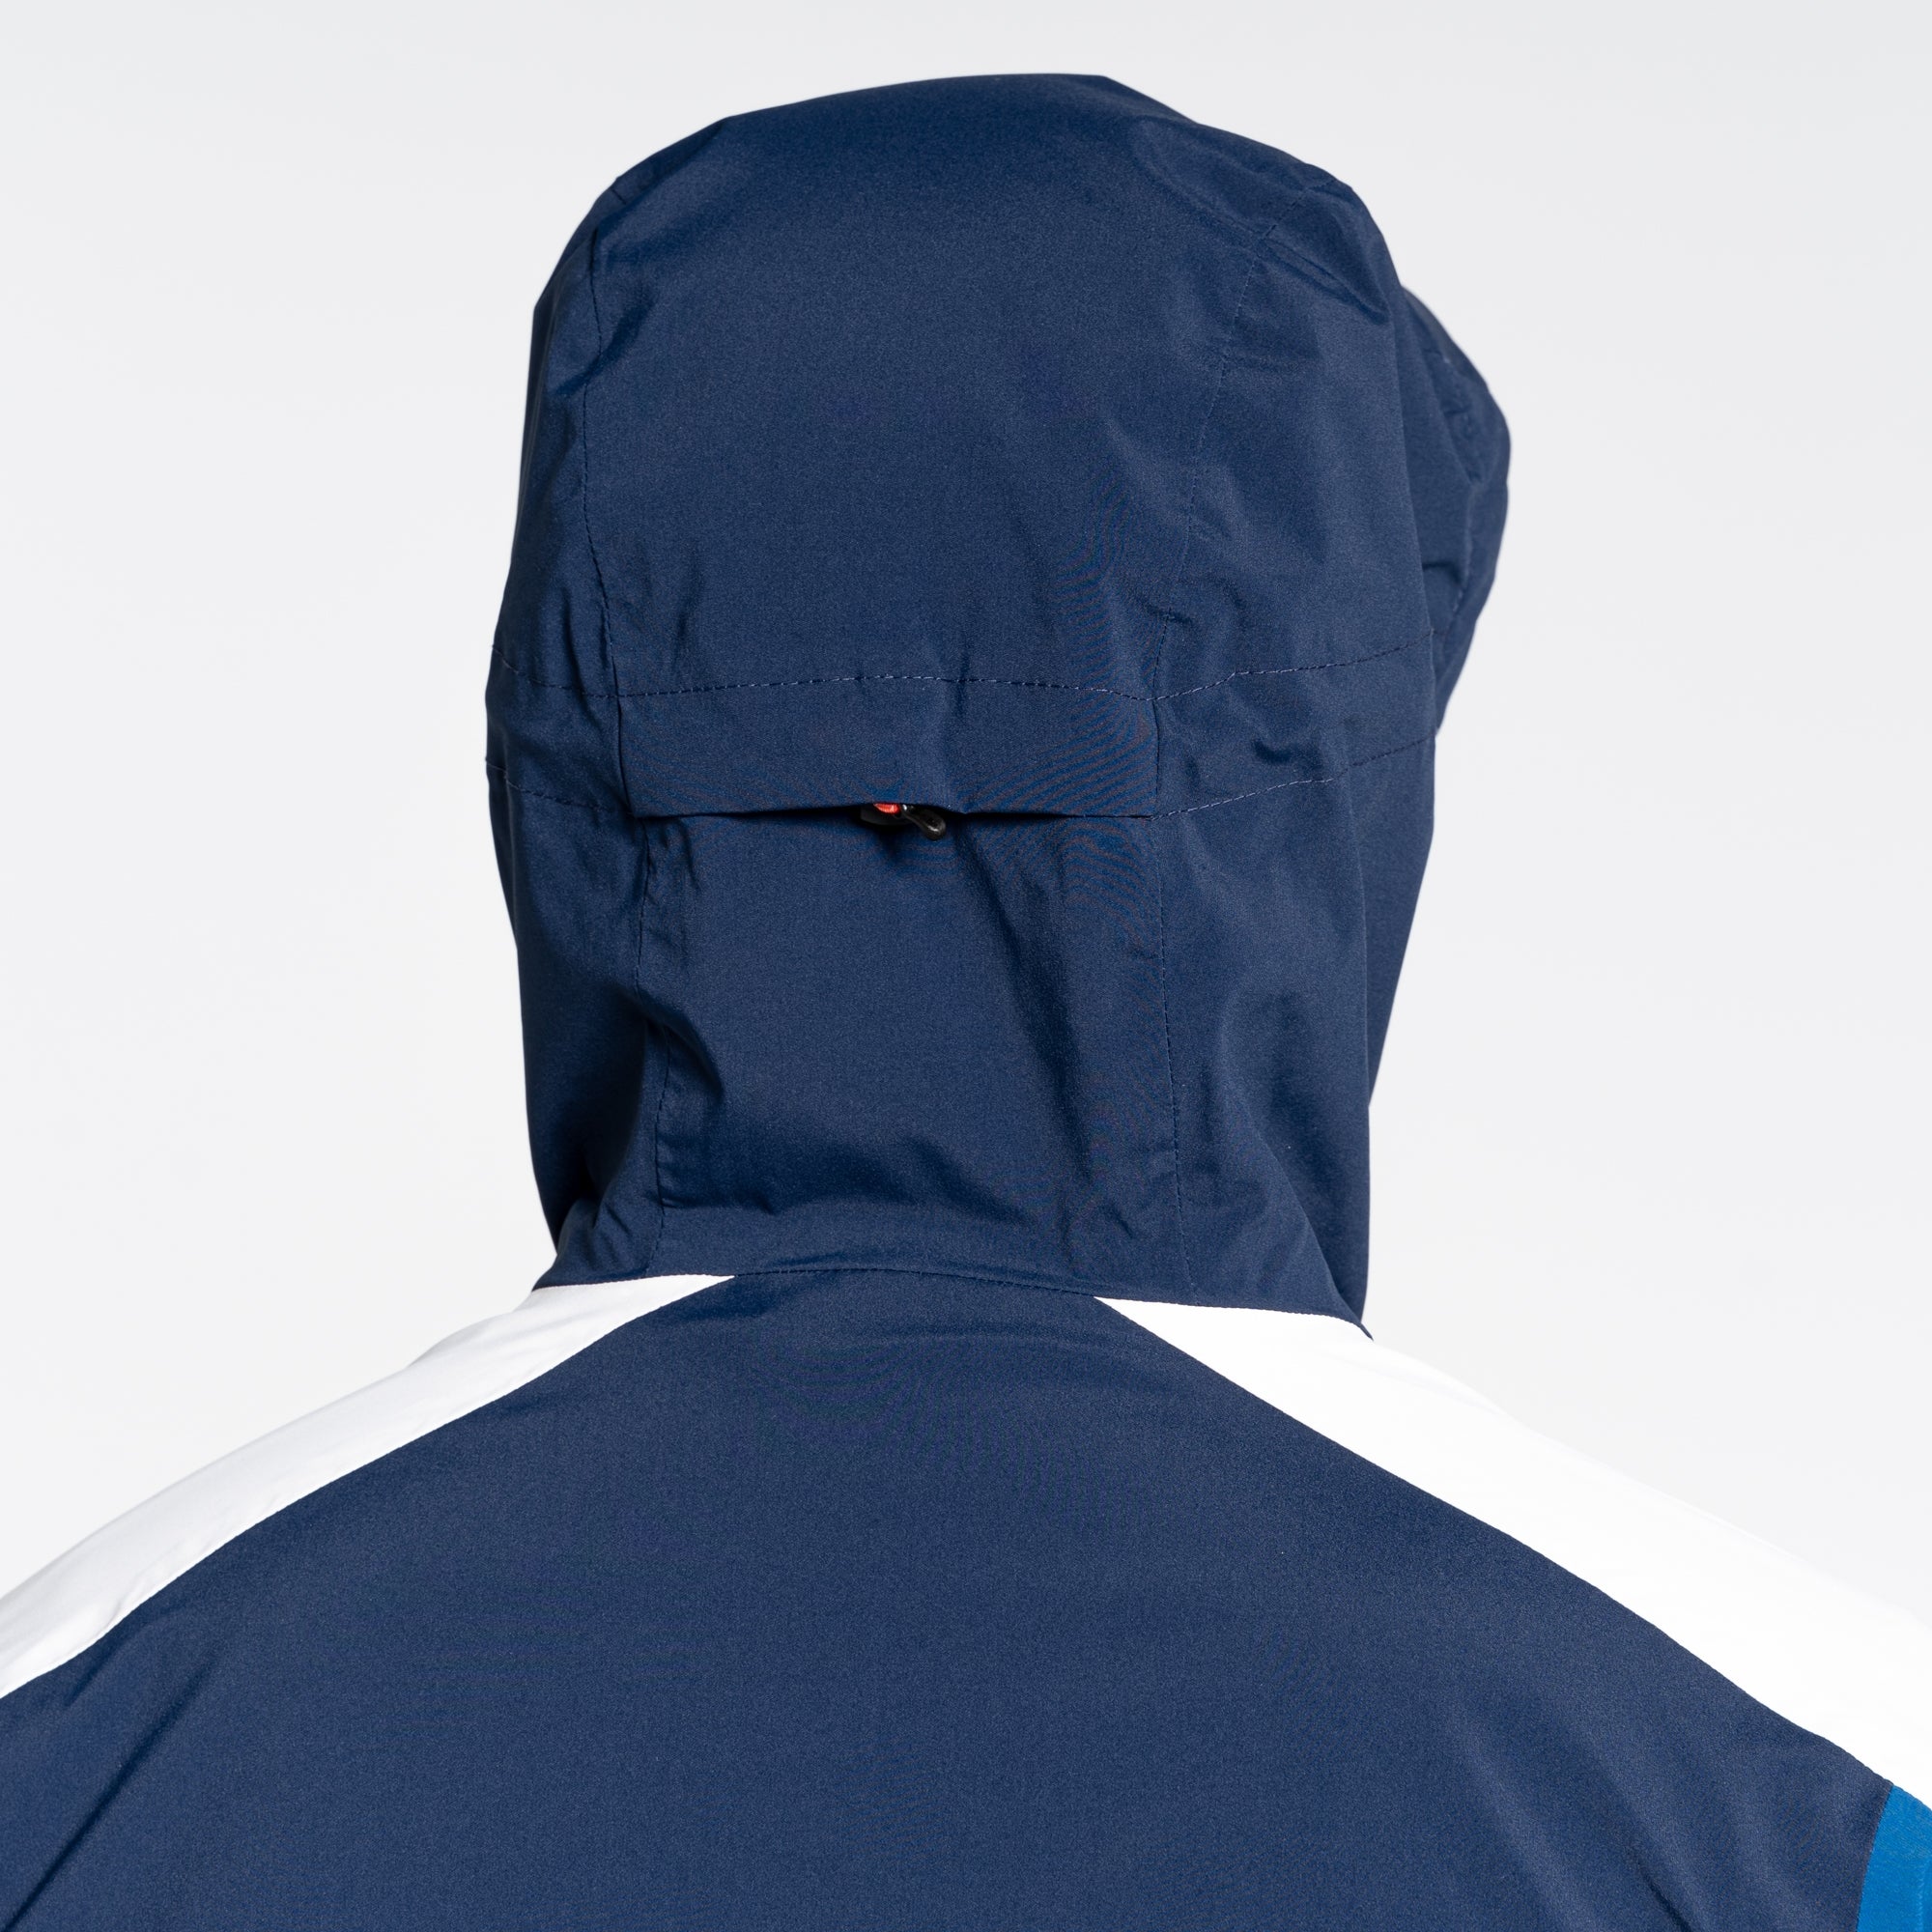 Men's Dynamic Jacket | Poseidon Blue/Blue Navy